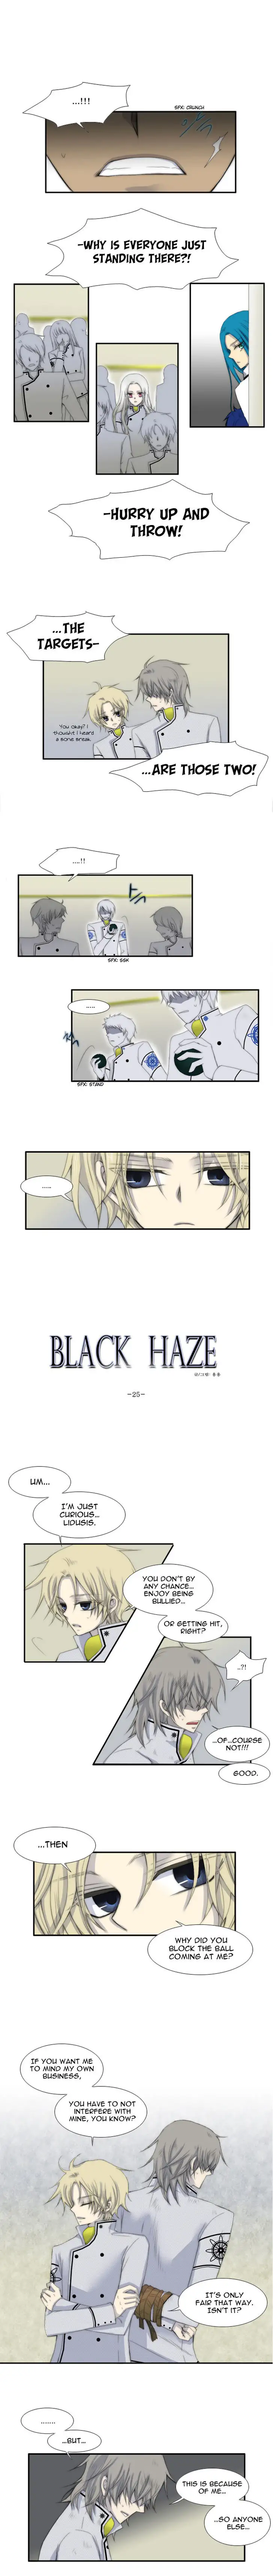 Black Haze - Chapter 25 Page 1